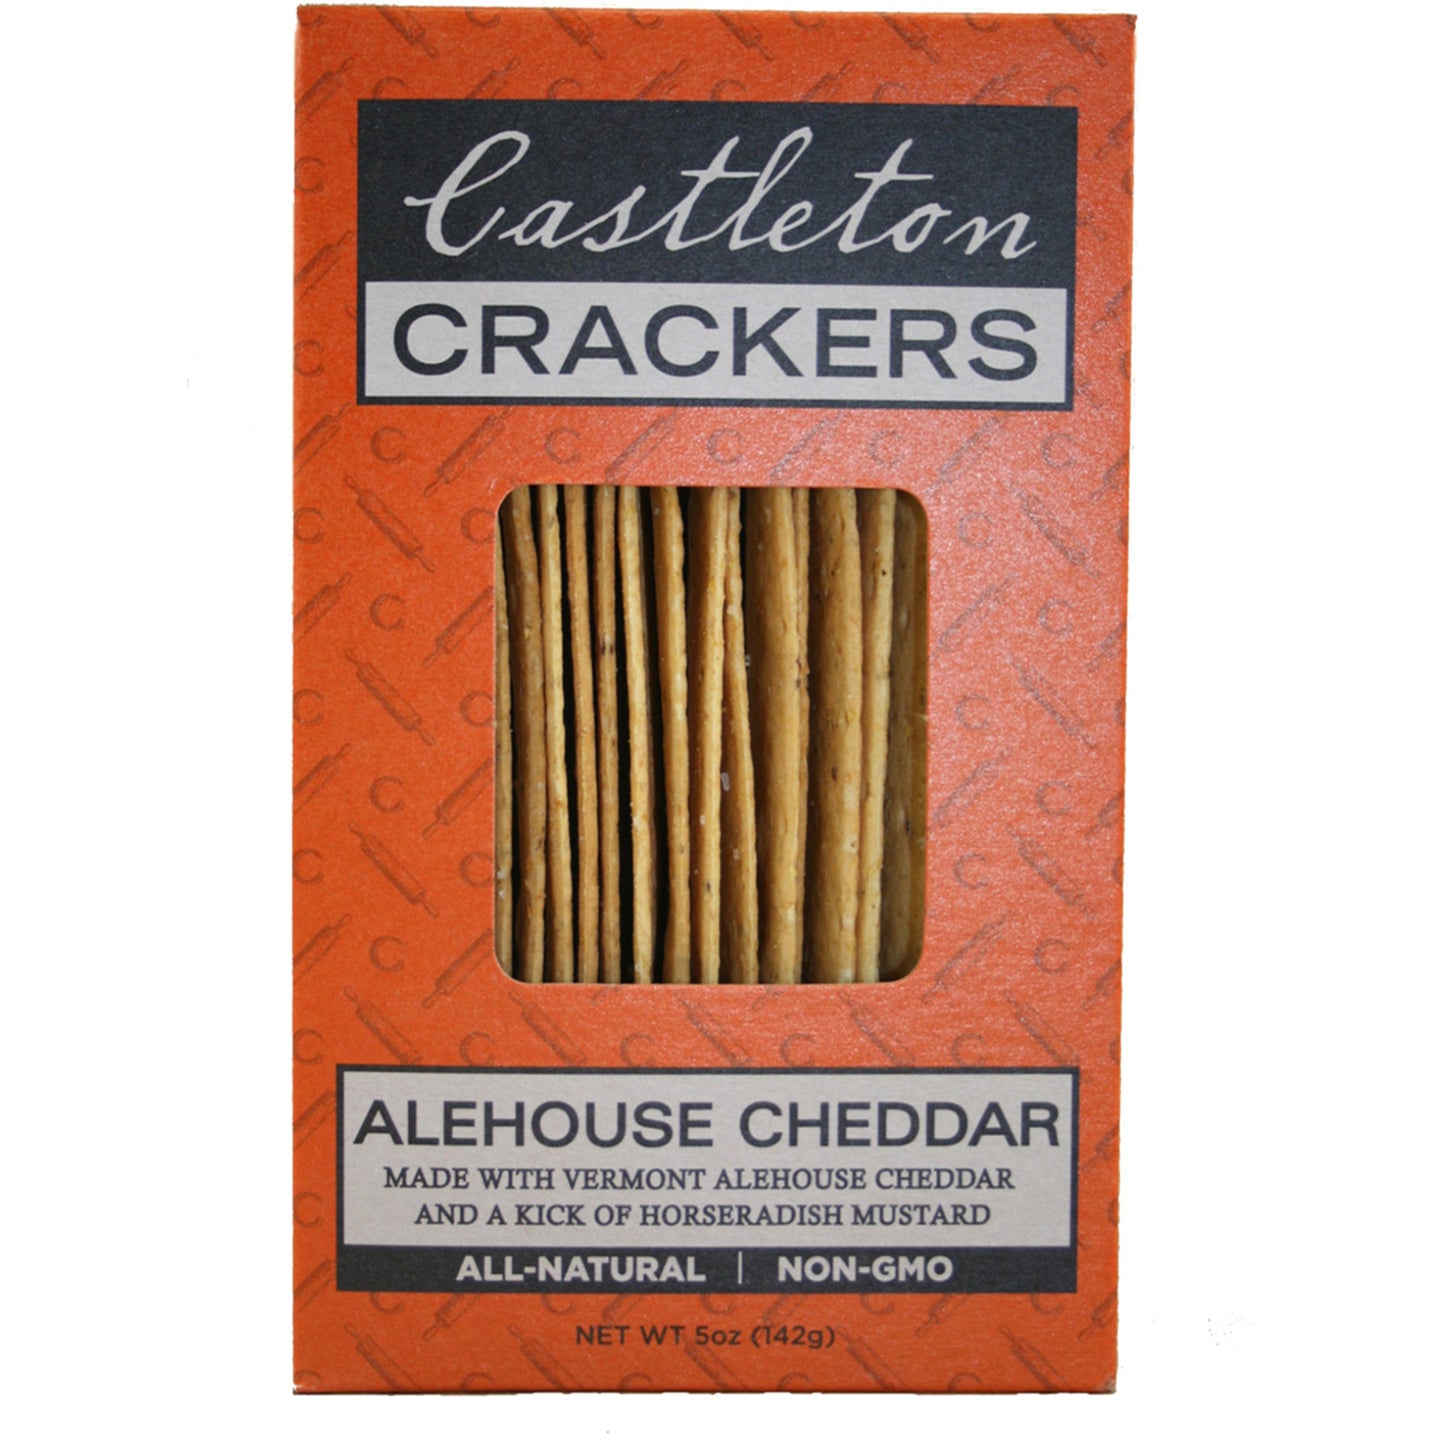 Castleton Crackers' Alehouse Cheddar